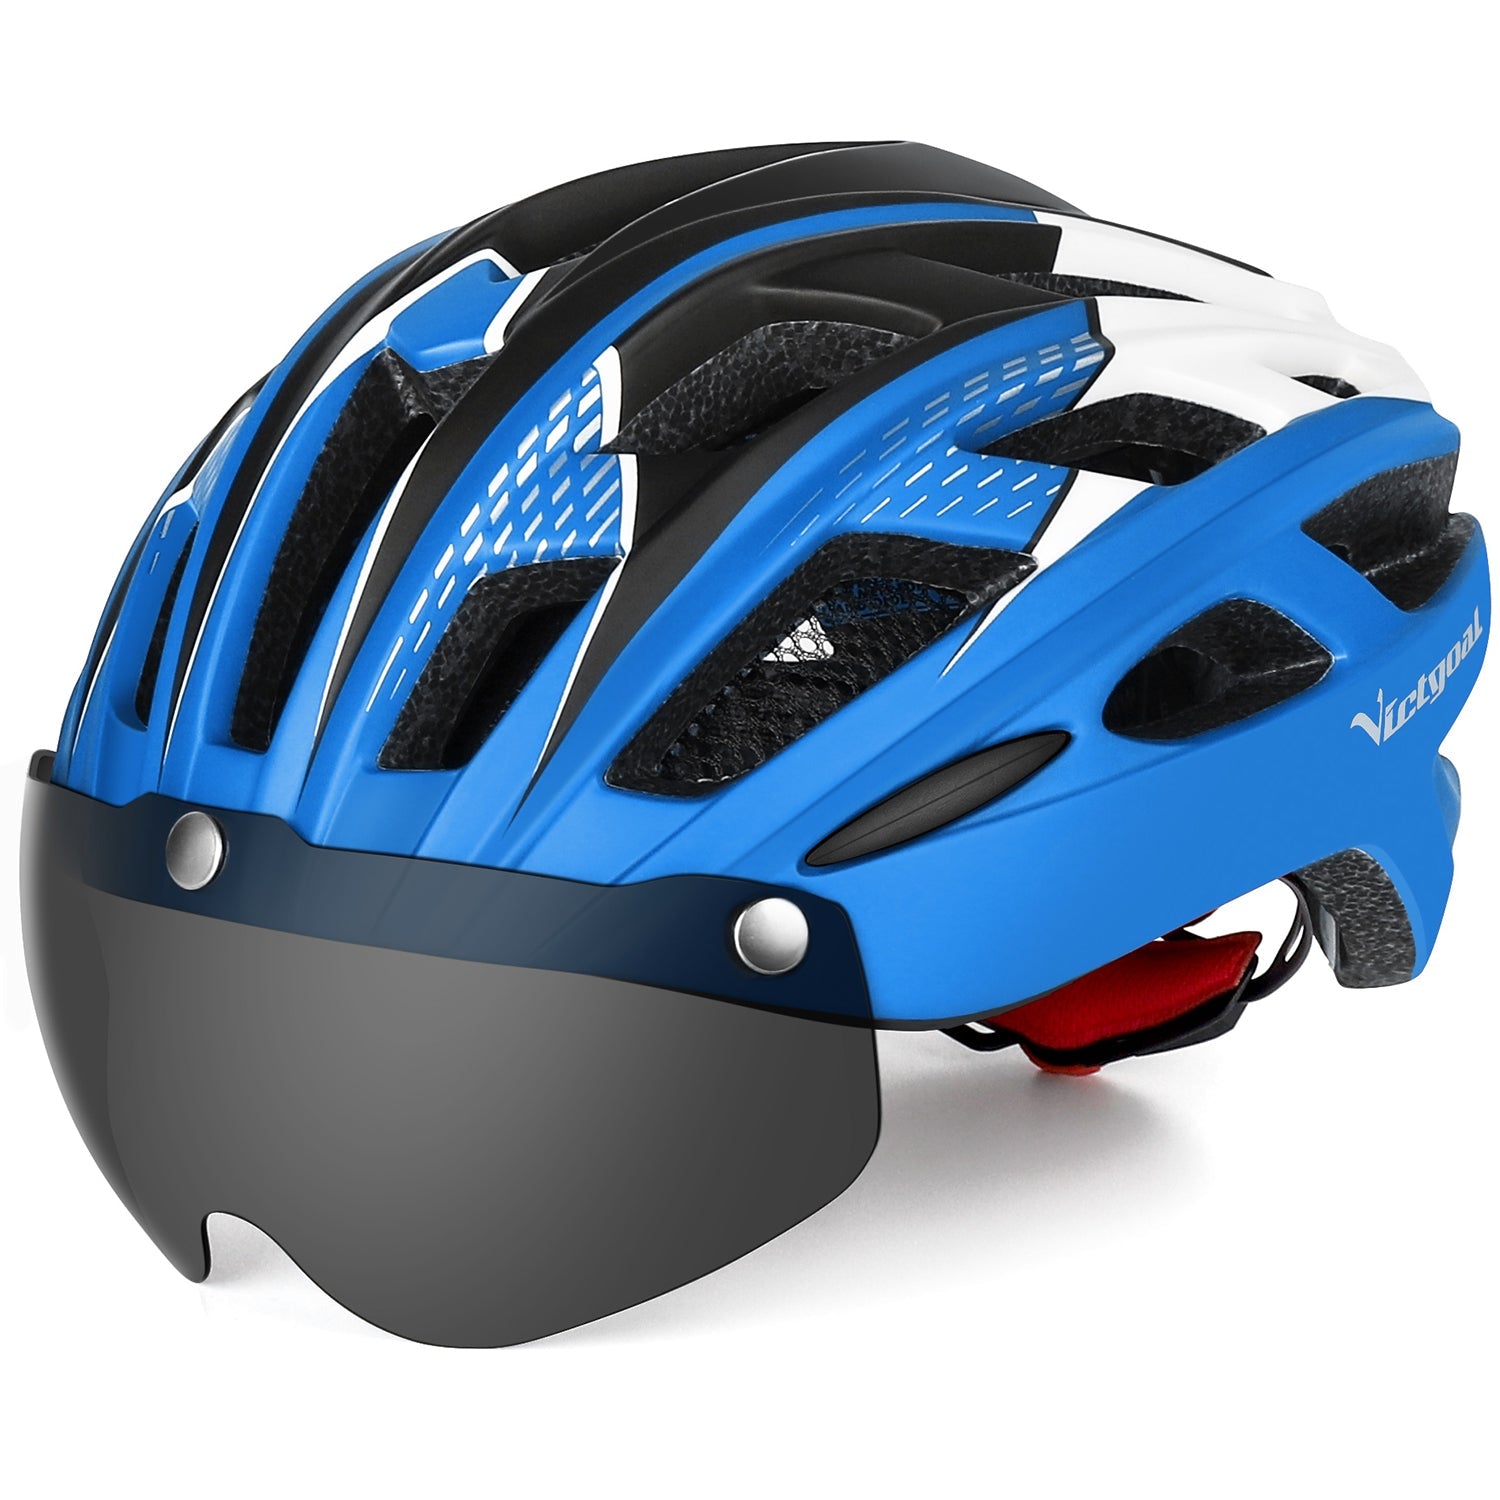 Goggles Bike Helmet LED Red Rear Light Urban E-Biking Adults Helmets VICTGOAL adultshelmets helmets